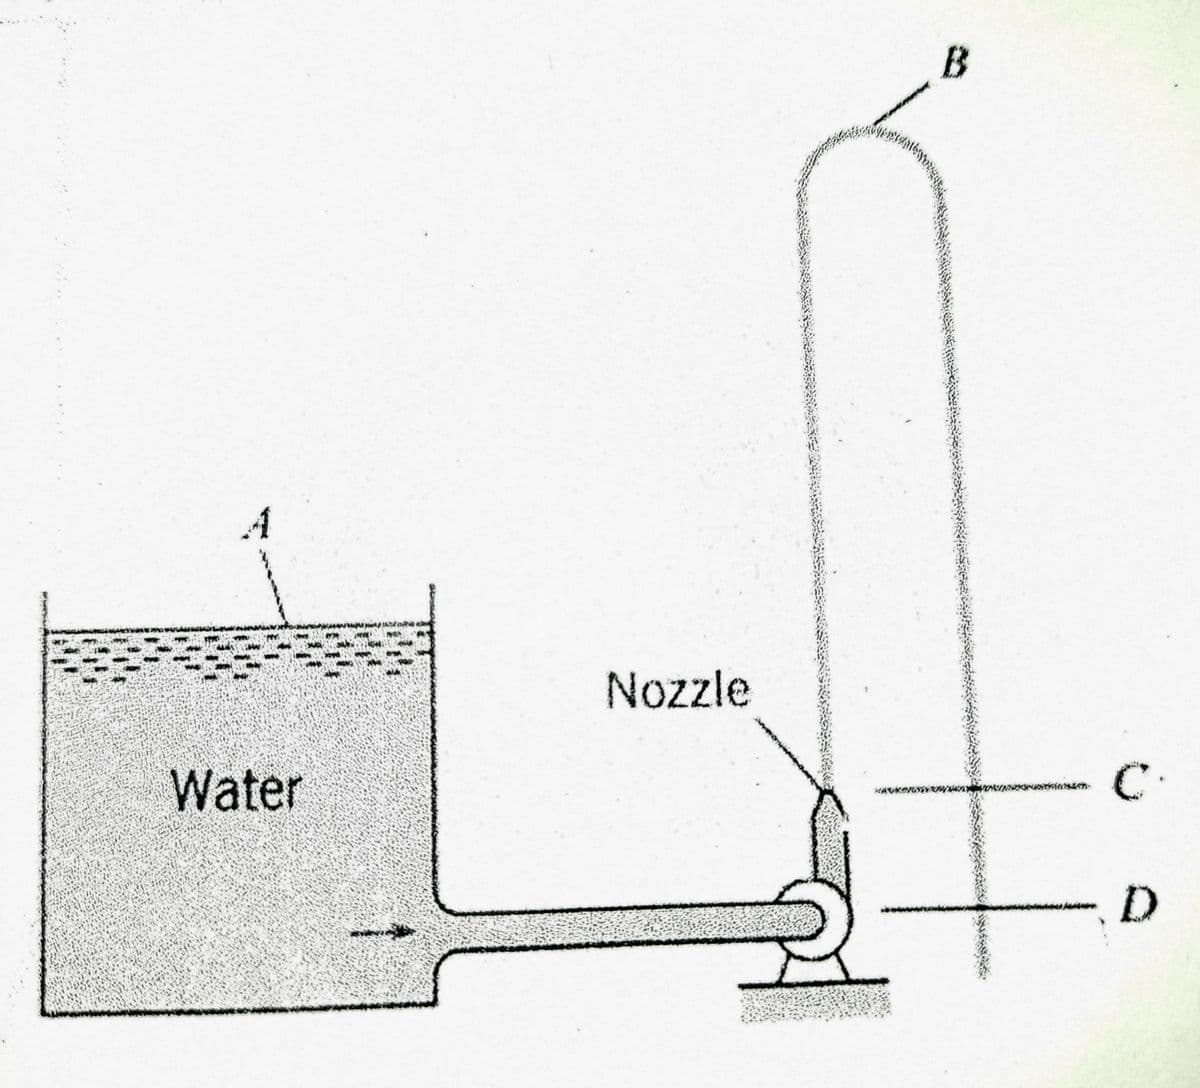 Nozzle
Water
